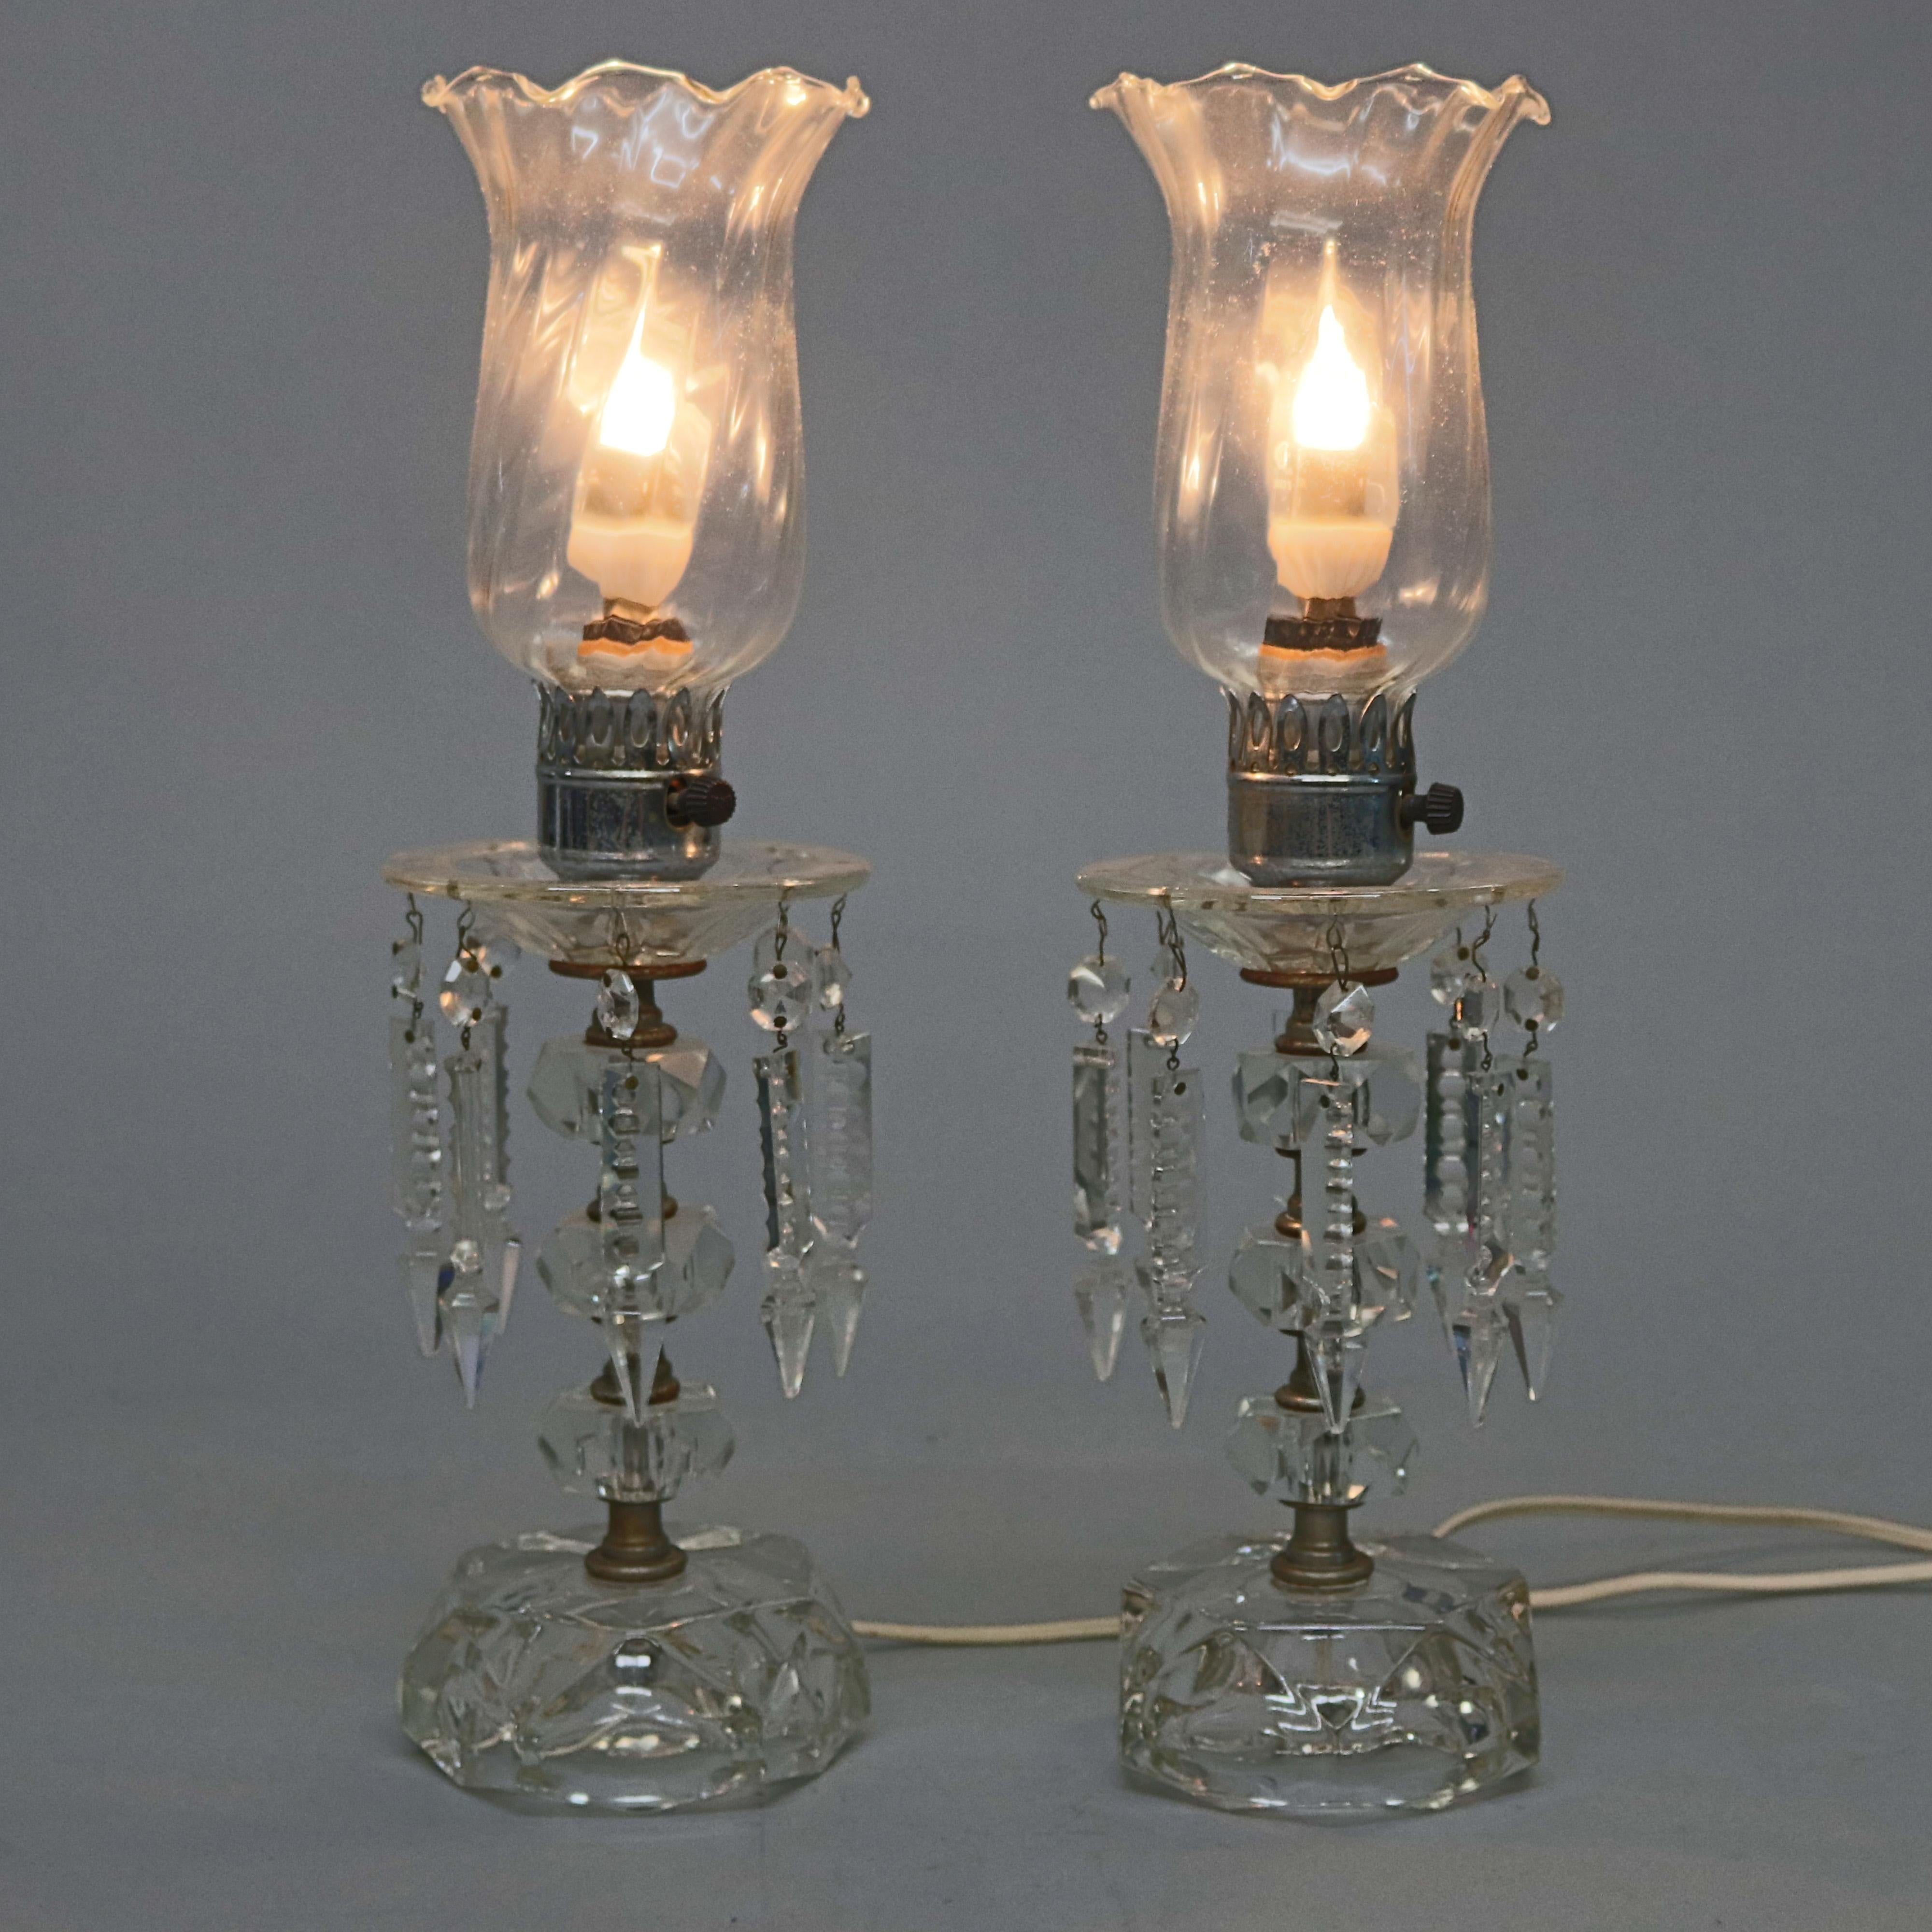 Victorian Antique Pair of Cut Crystal Candelabra Balustrade Table Lamps, circa 1930